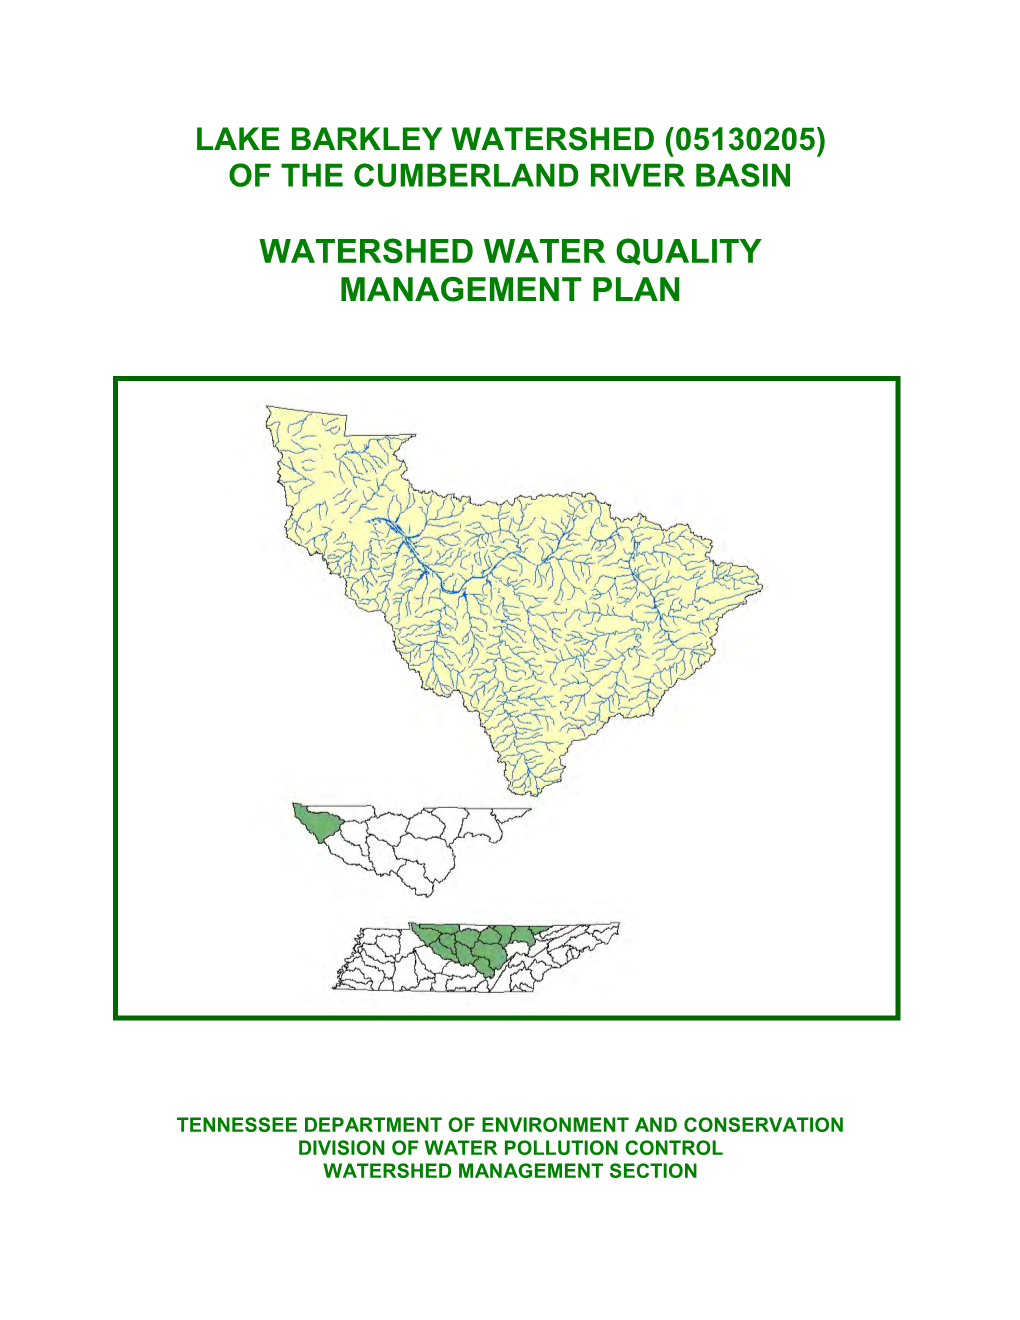 Lake Barkley Water Quality Management Plan